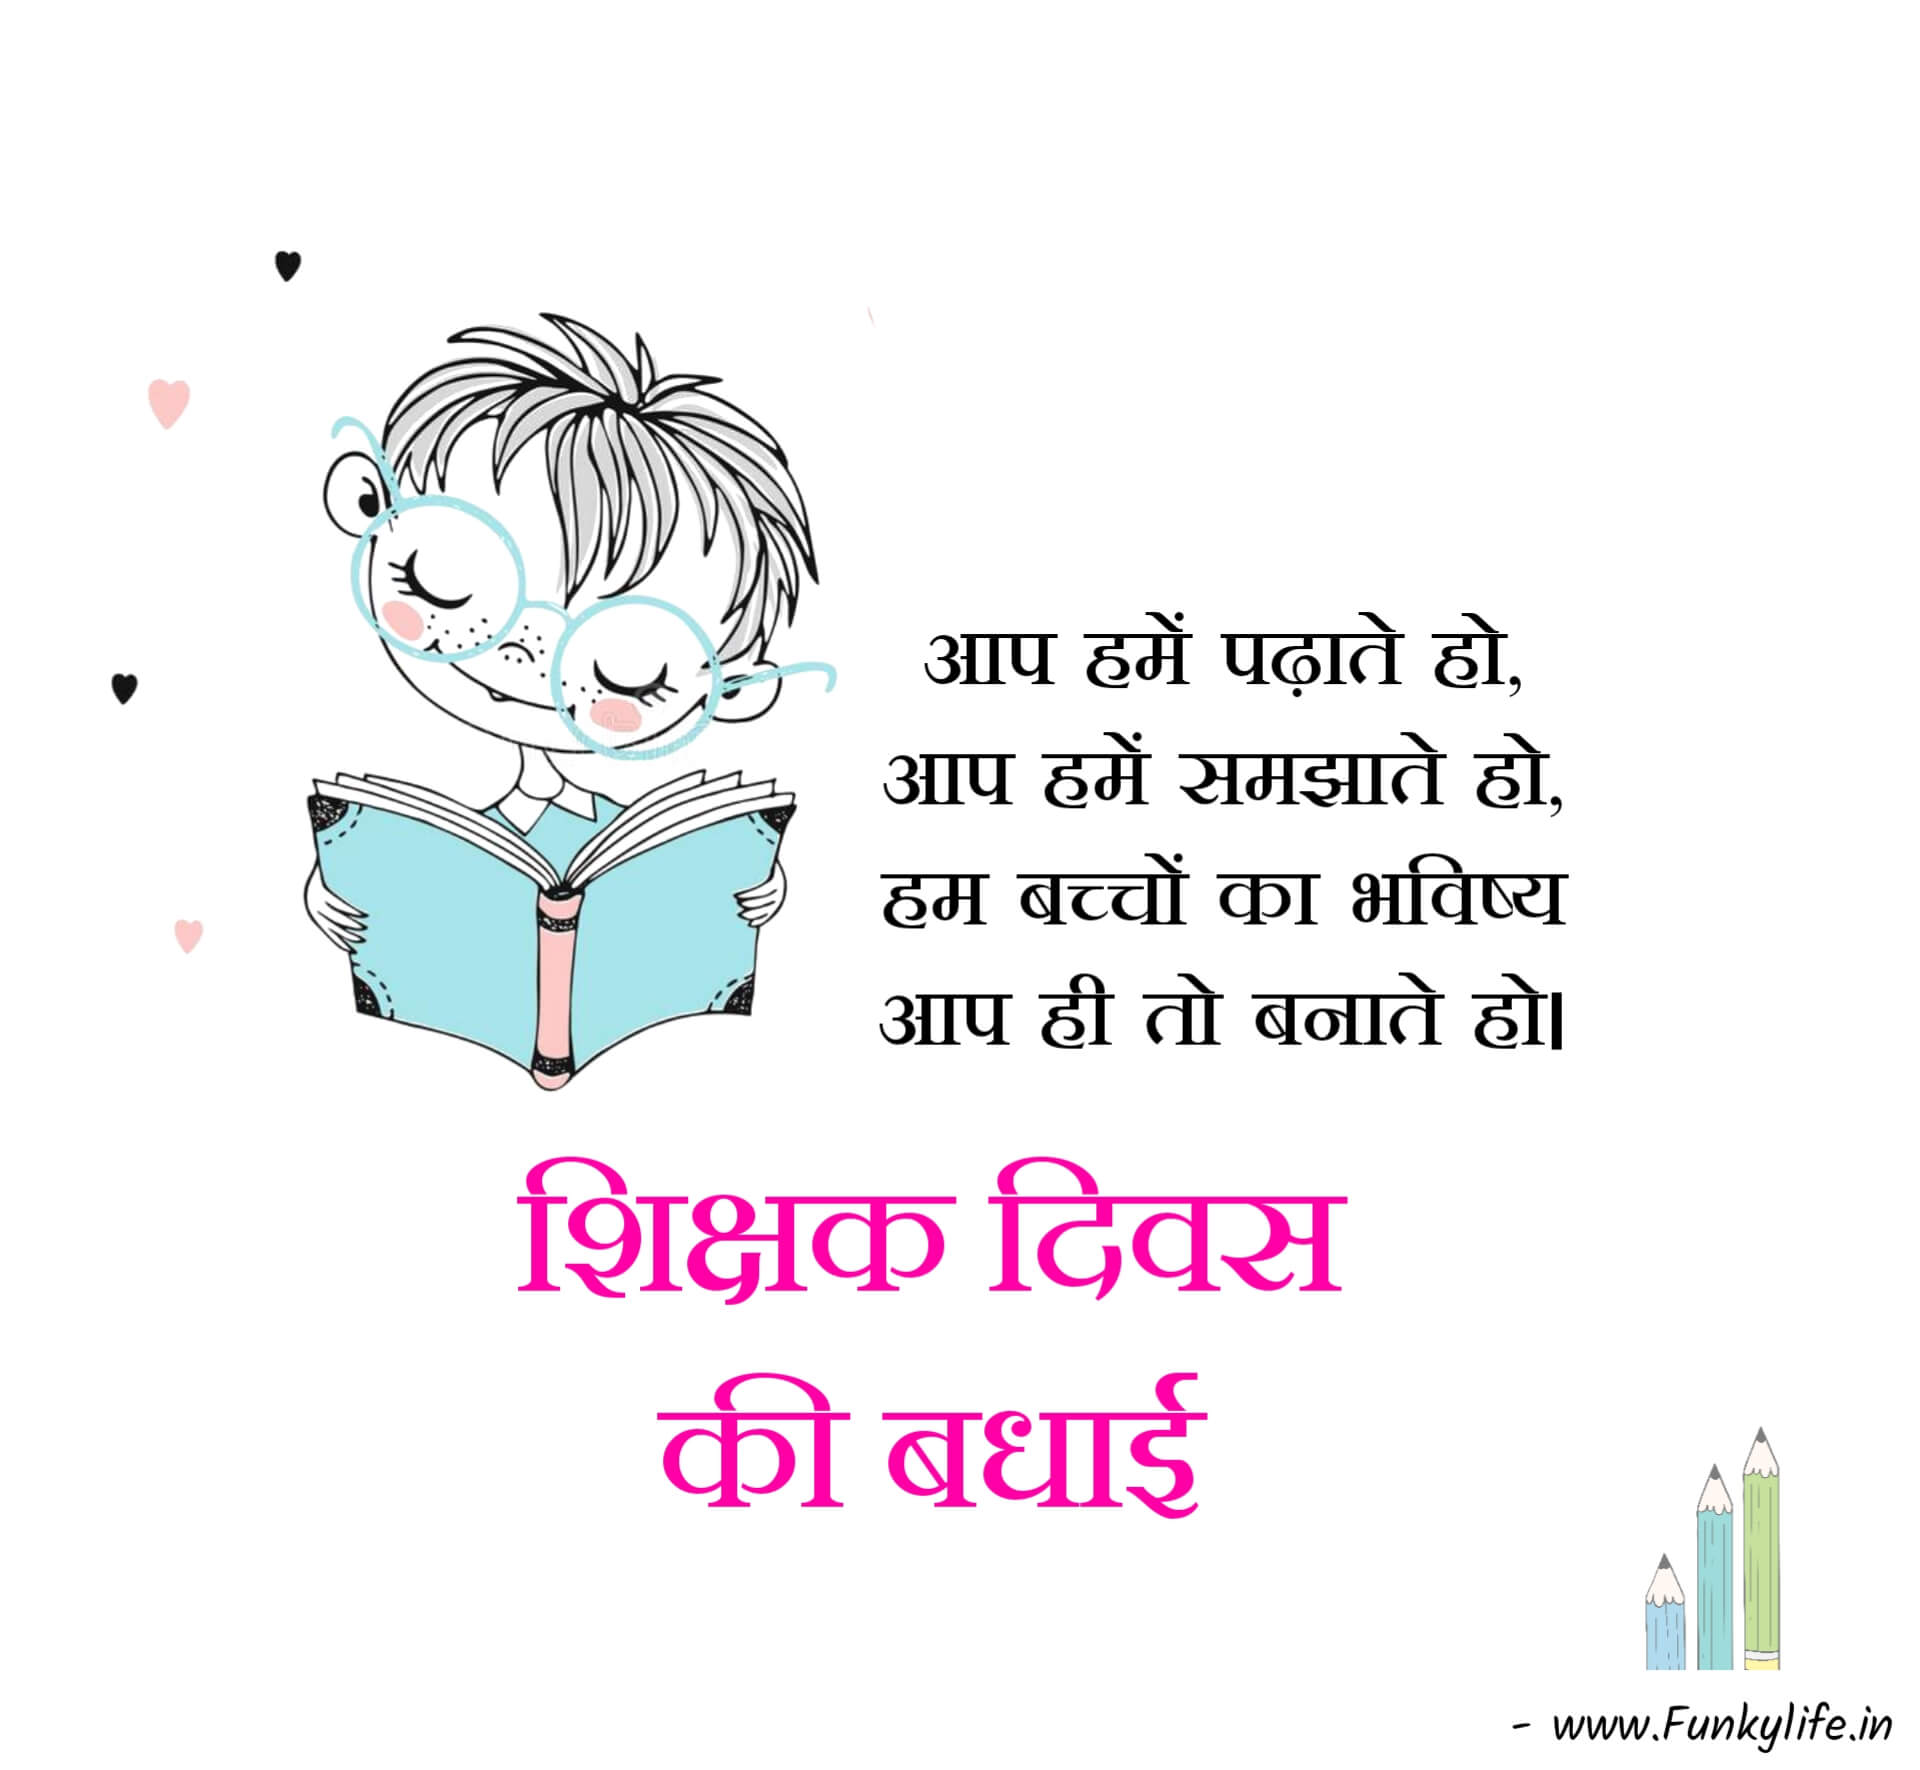 Hindi Teachers Day Images